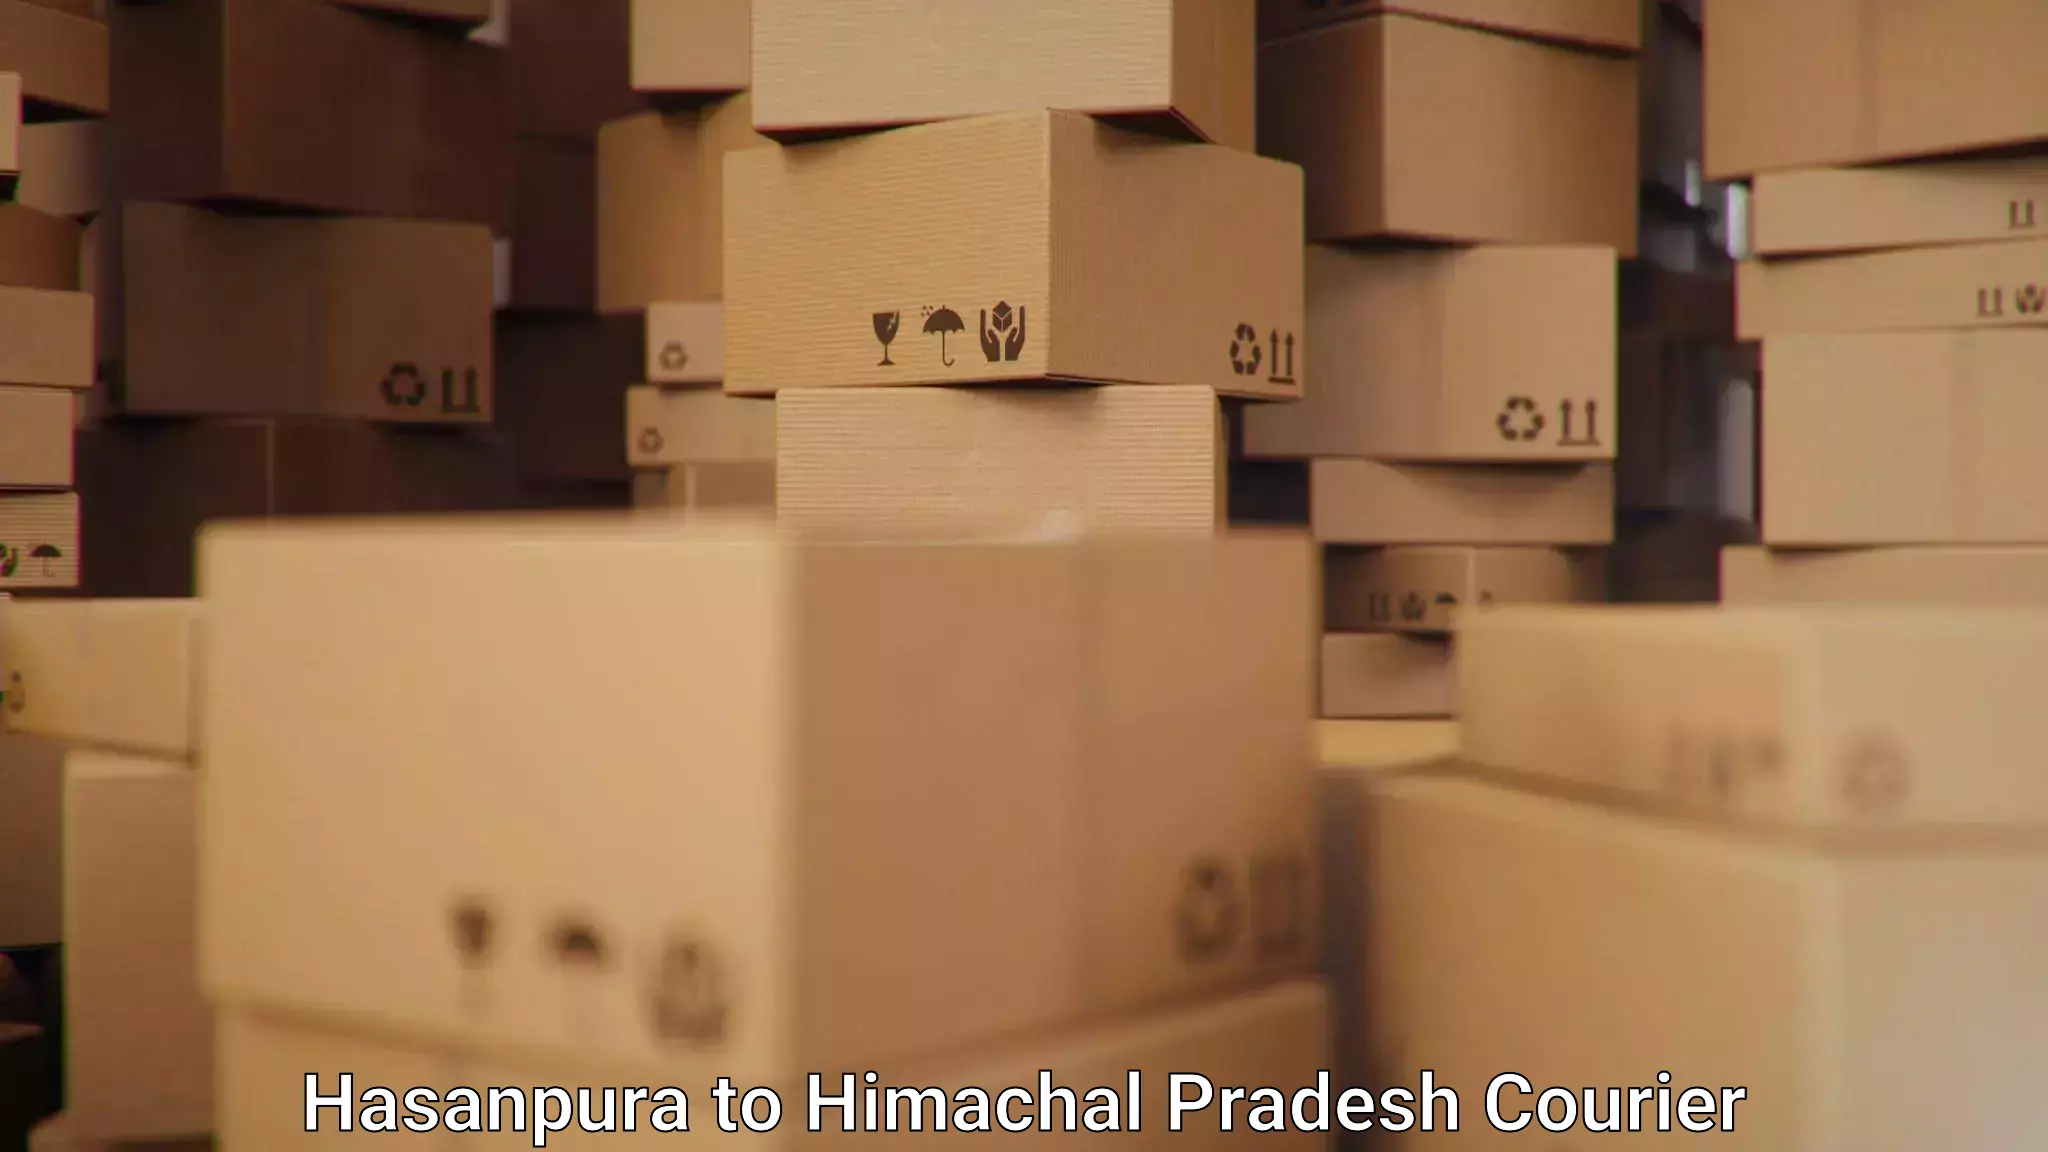 Courier service partnerships Hasanpura to Himachal Pradesh